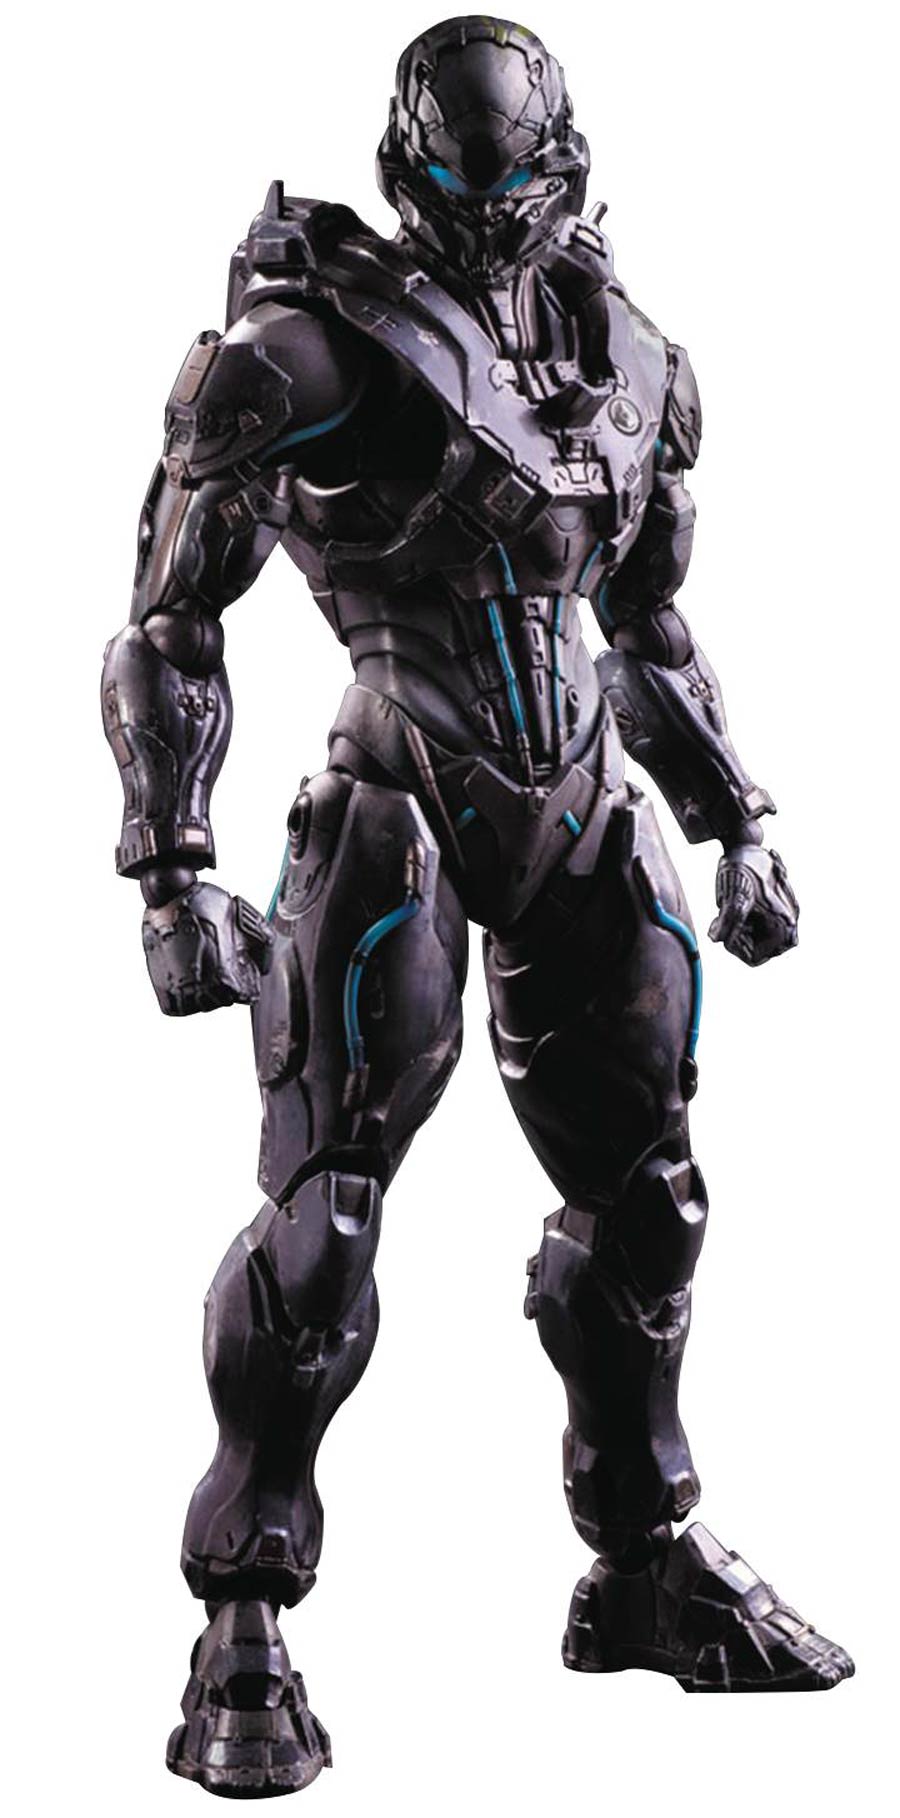 Halo 5 Play Arts Kai Action Figure - Spartan Locke